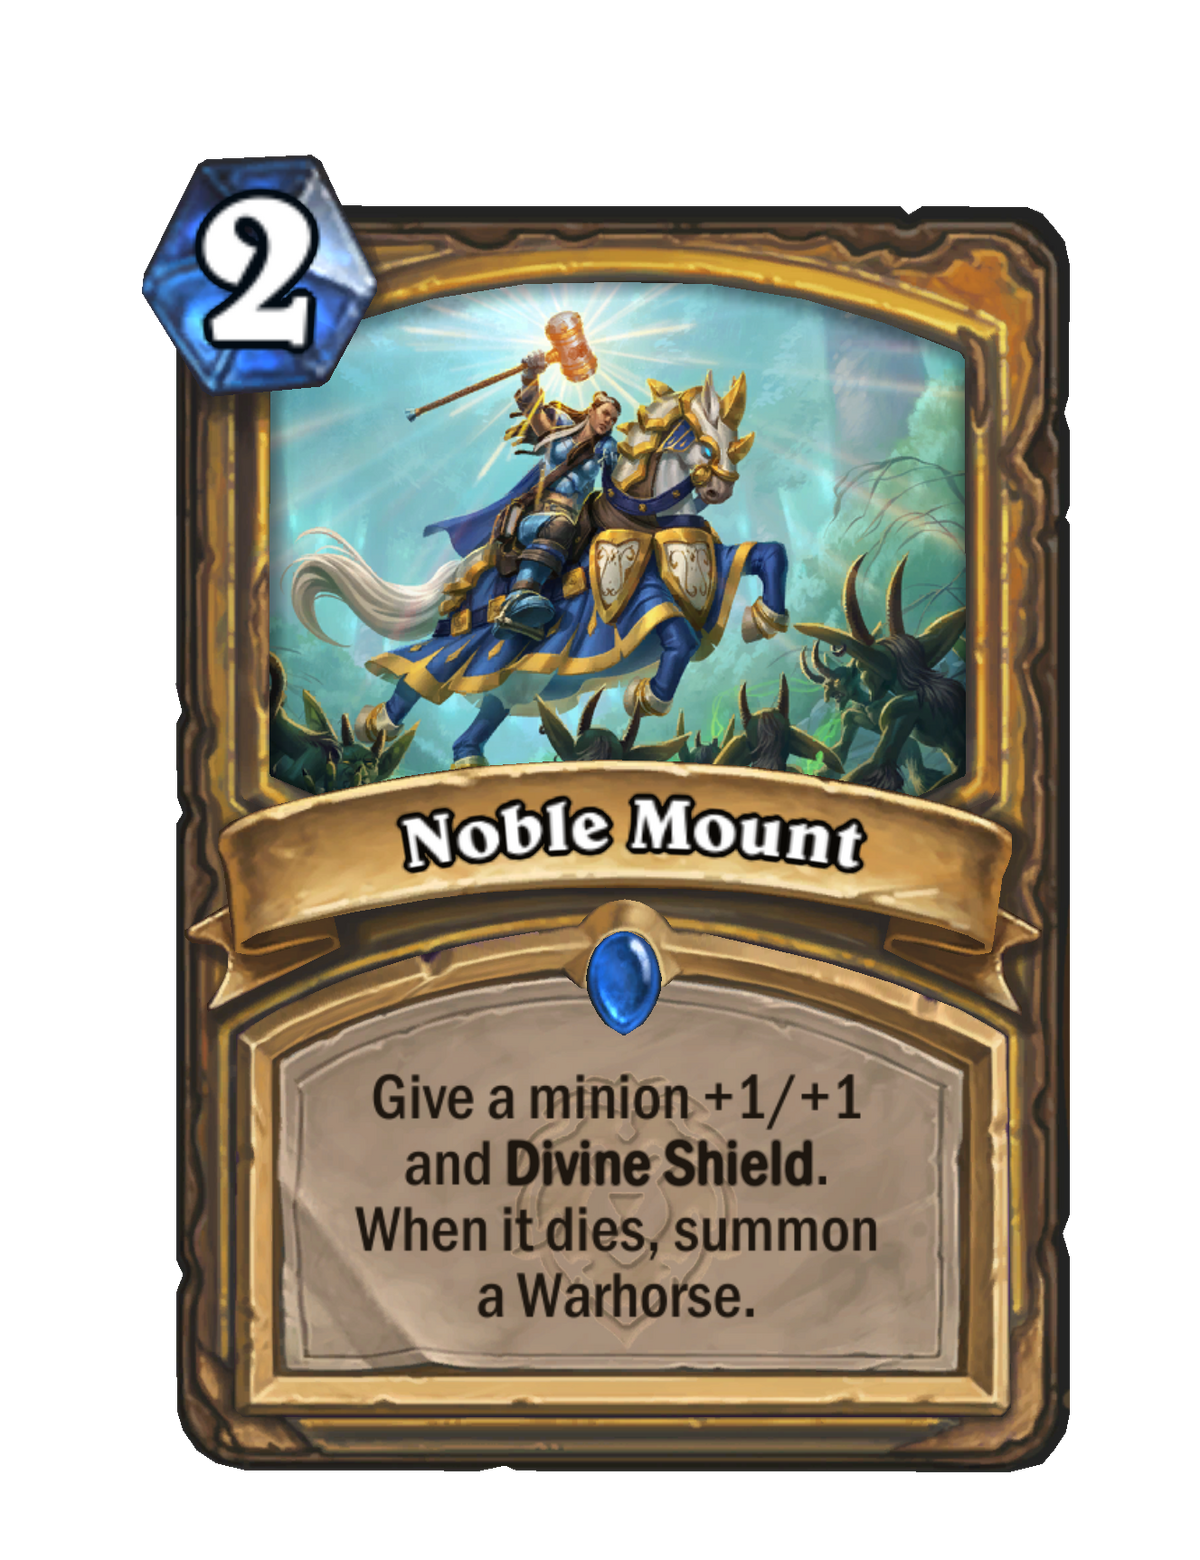 Noble Mount